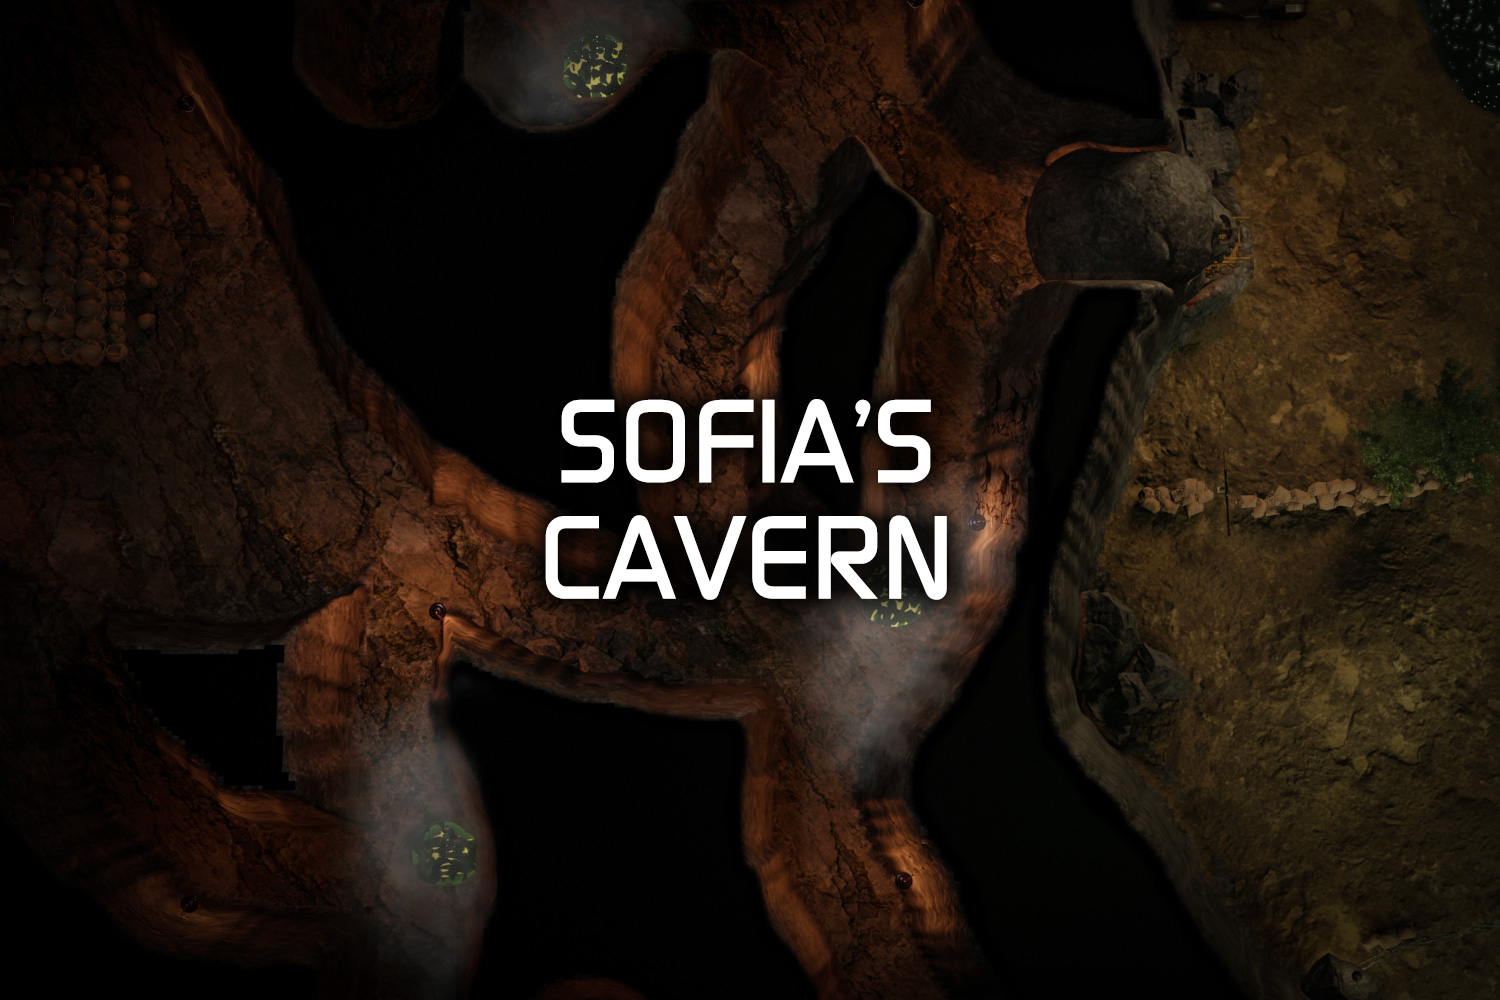 SOFIA’S CAVERN